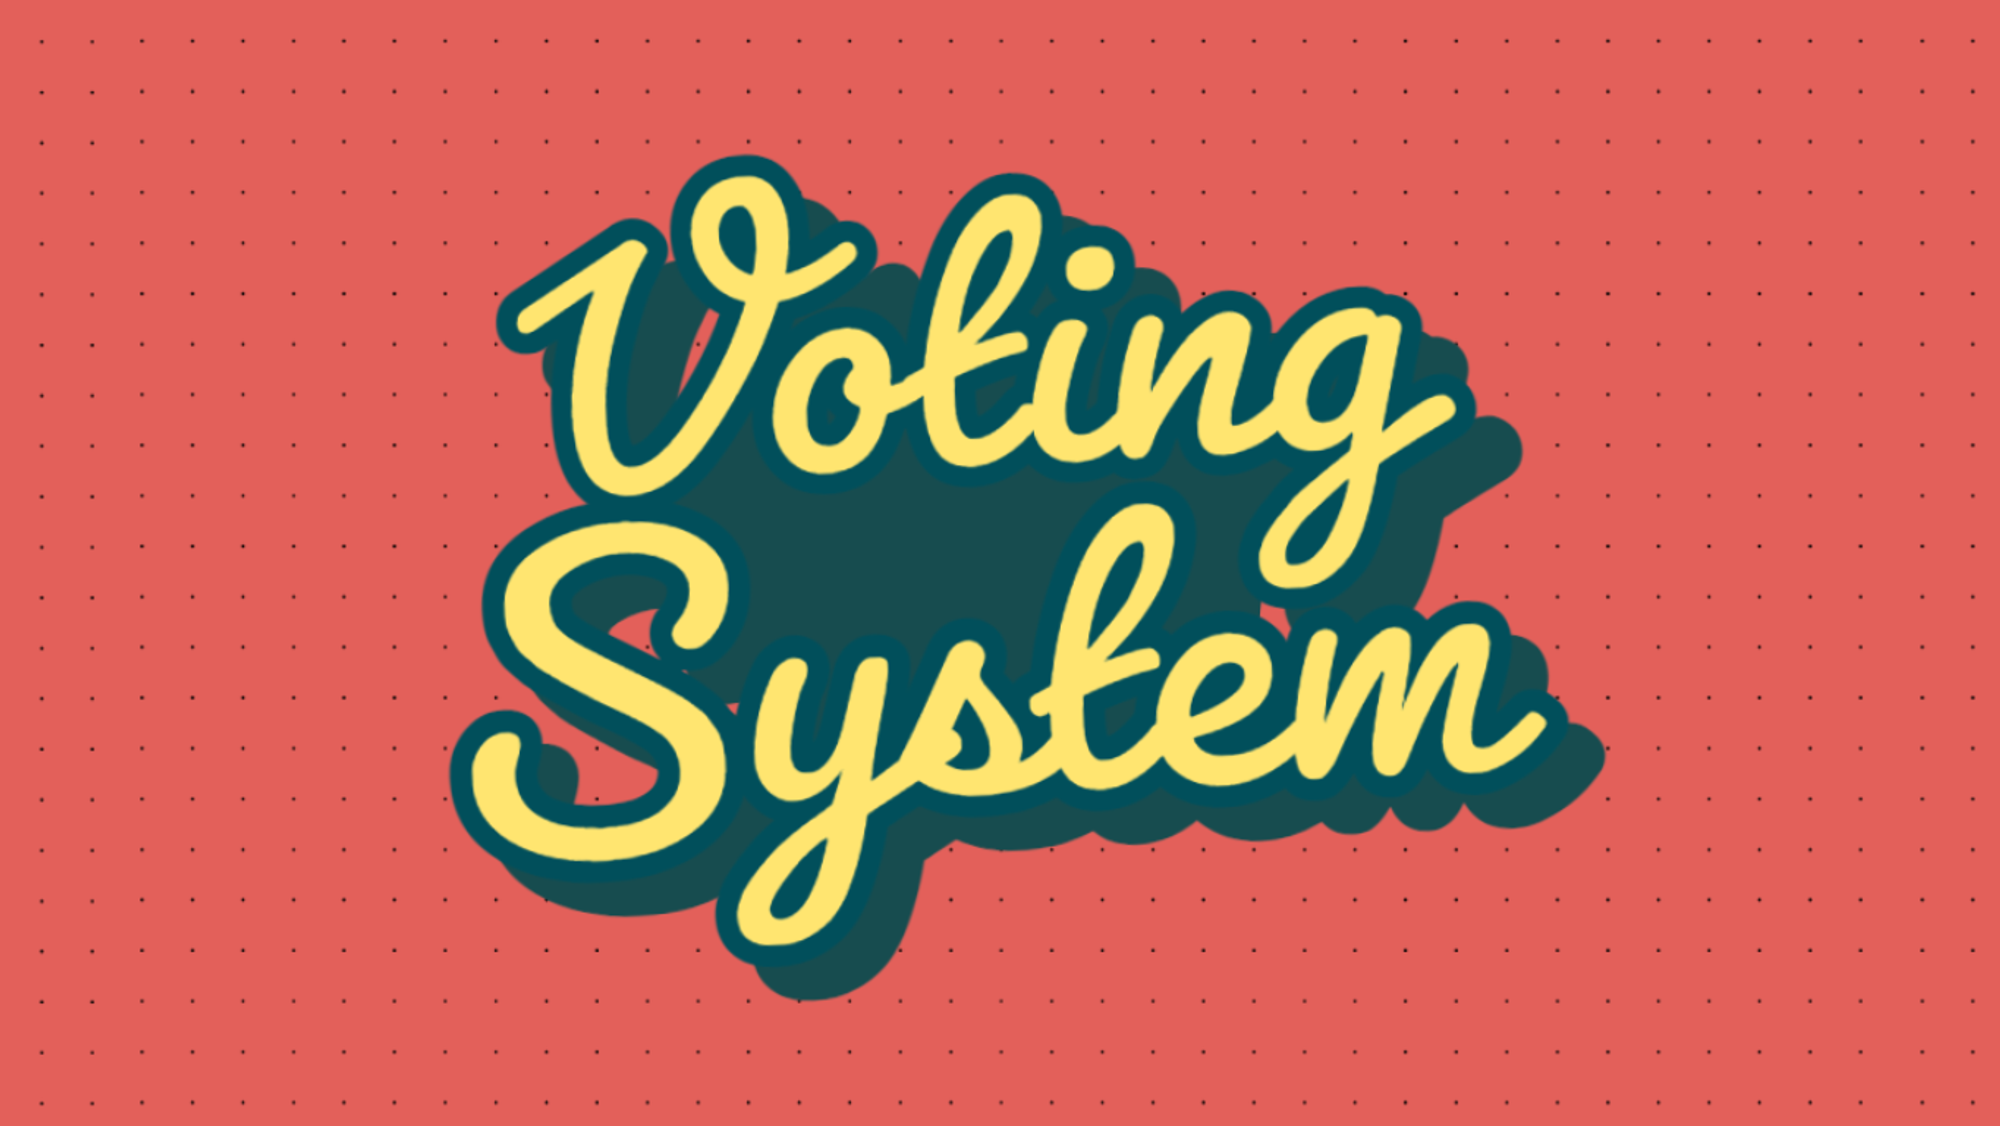 Voting System